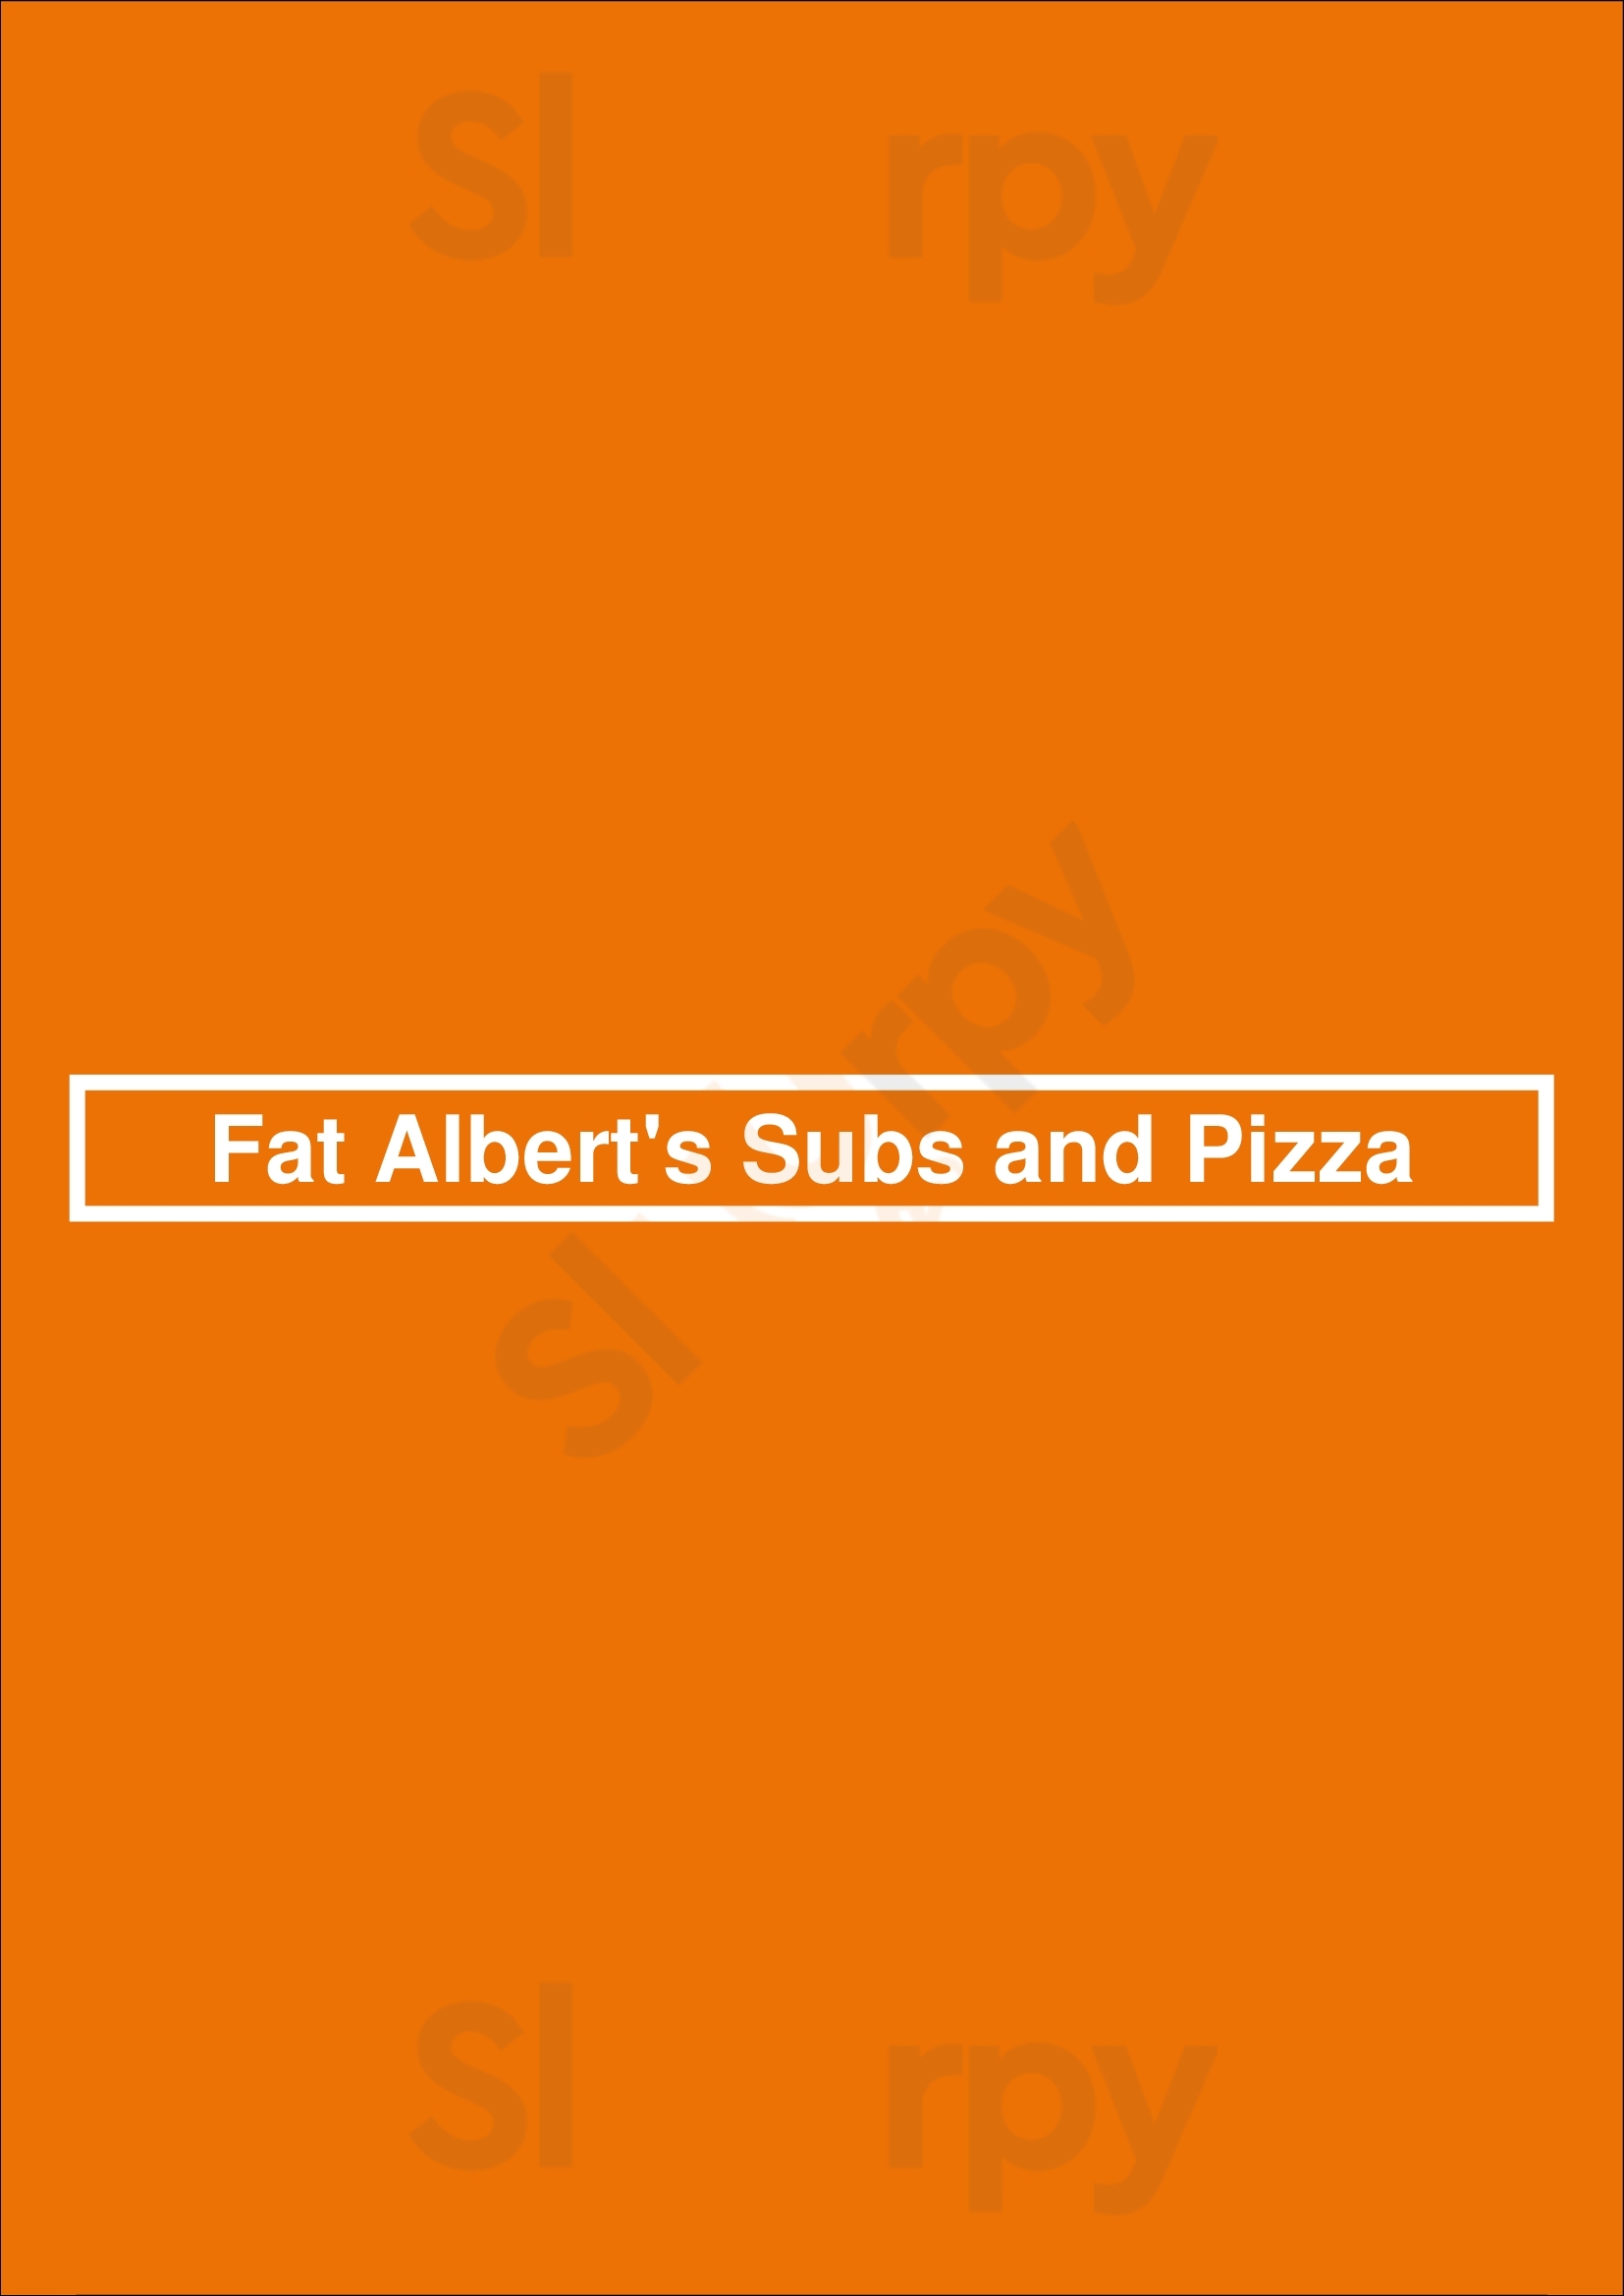 Fat Albert's Subs And Pizza Ottawa Menu - 1